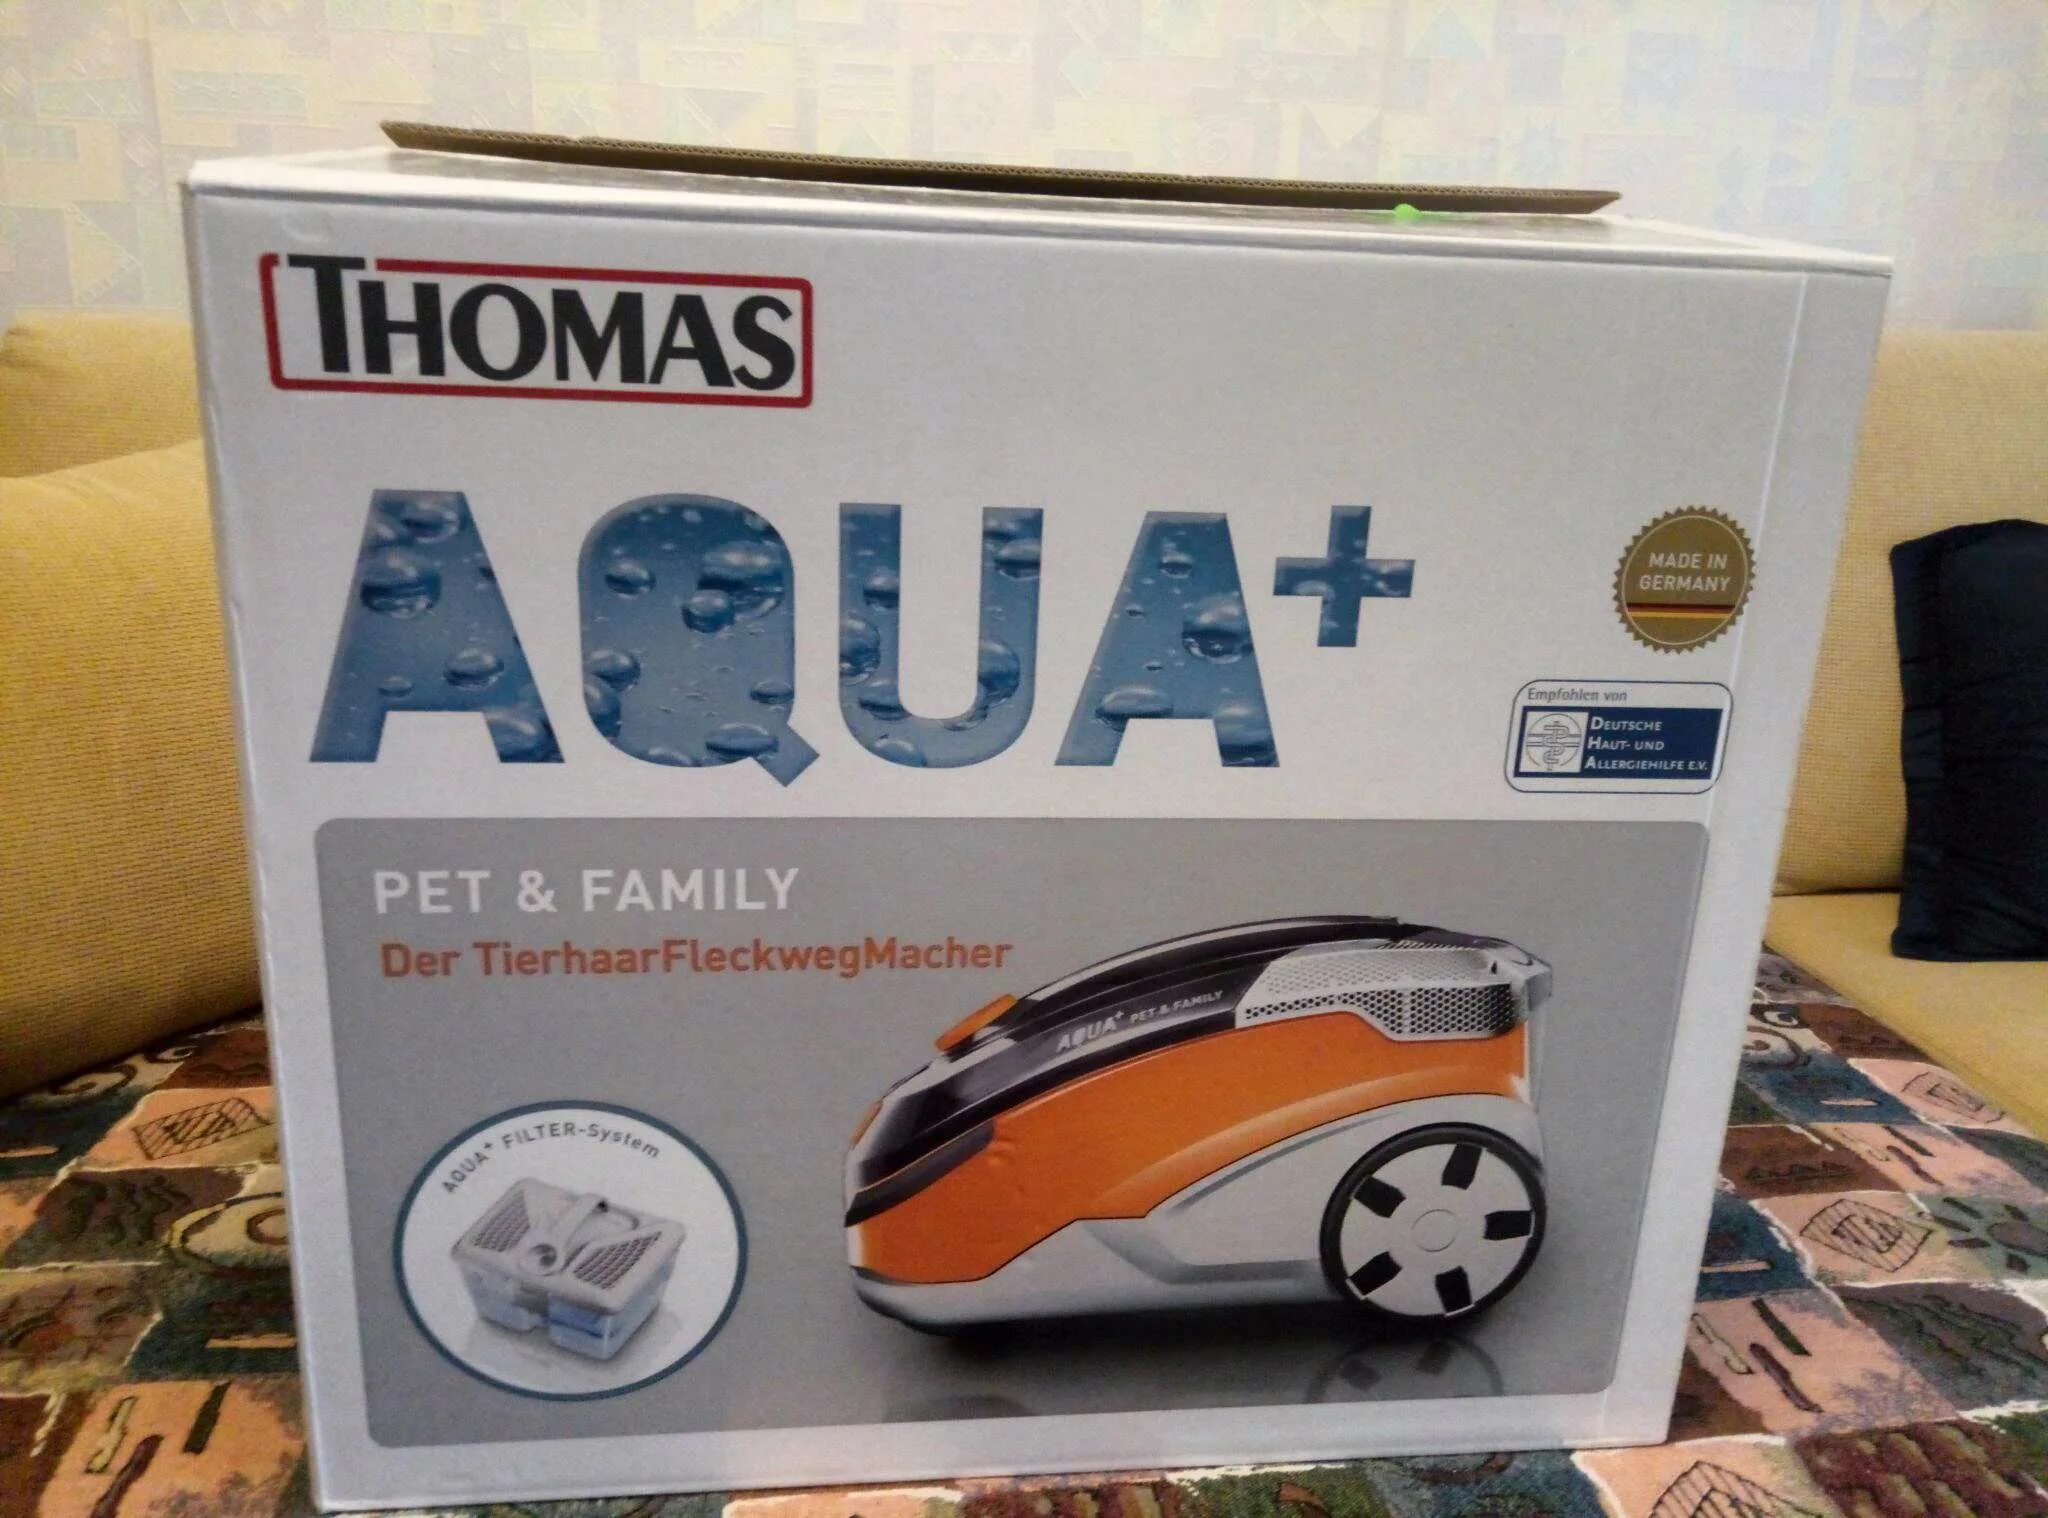 Моющий пылесос Thomas Pet & Family. Пылесос Thomas Aqua Pet&Family parquet Pro. Thomas pet family parquet